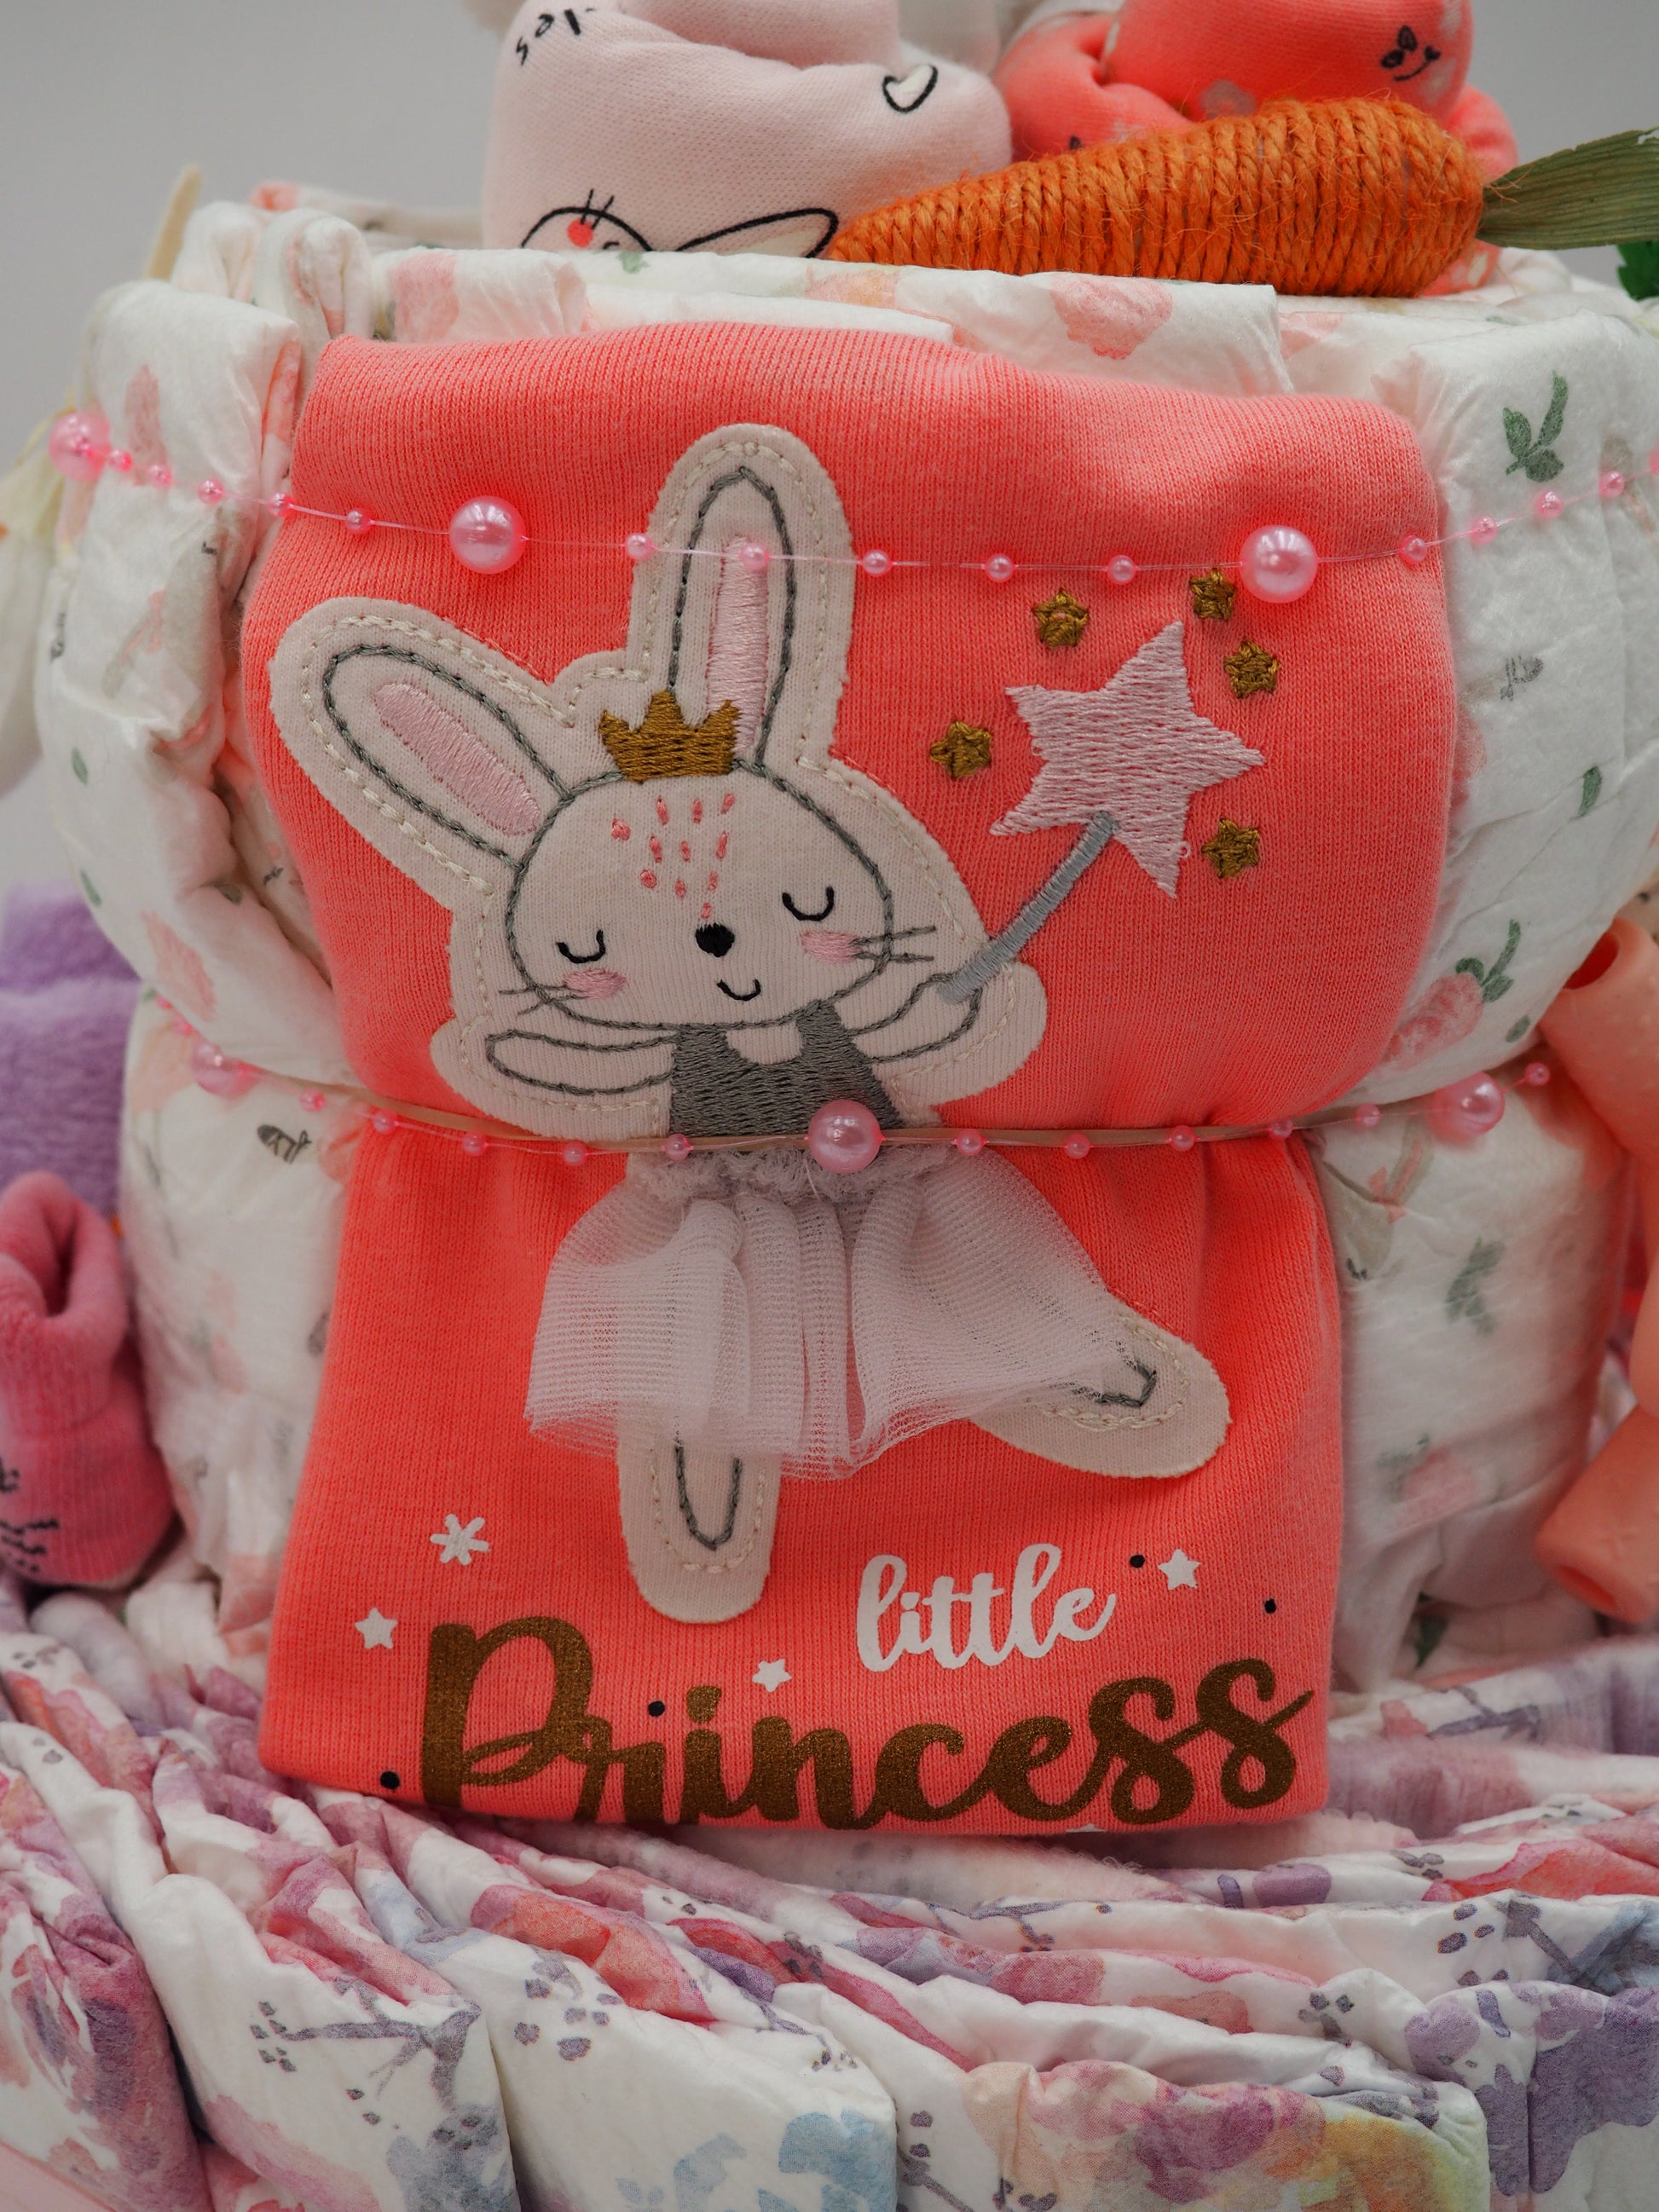 Peter Rabbit Wheelbarrow Diaper Cake - Freshly Fuji